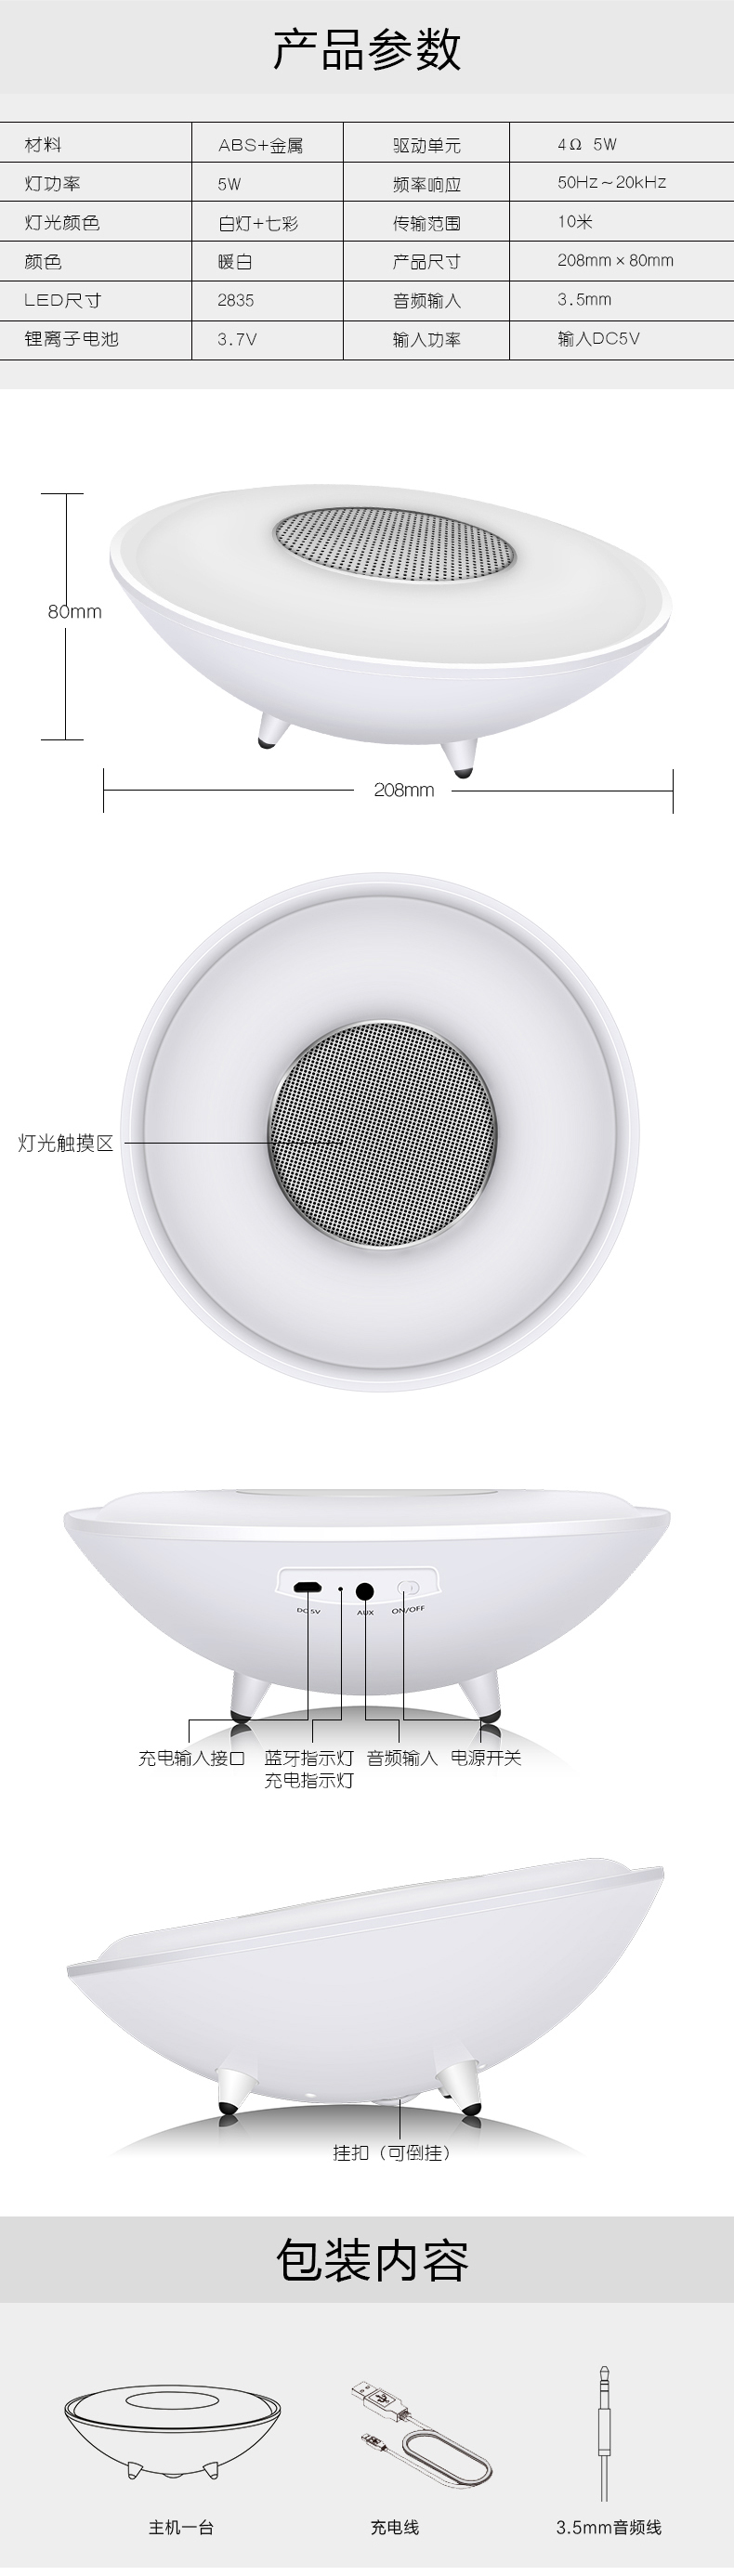 X5 home bluetooth speaker light